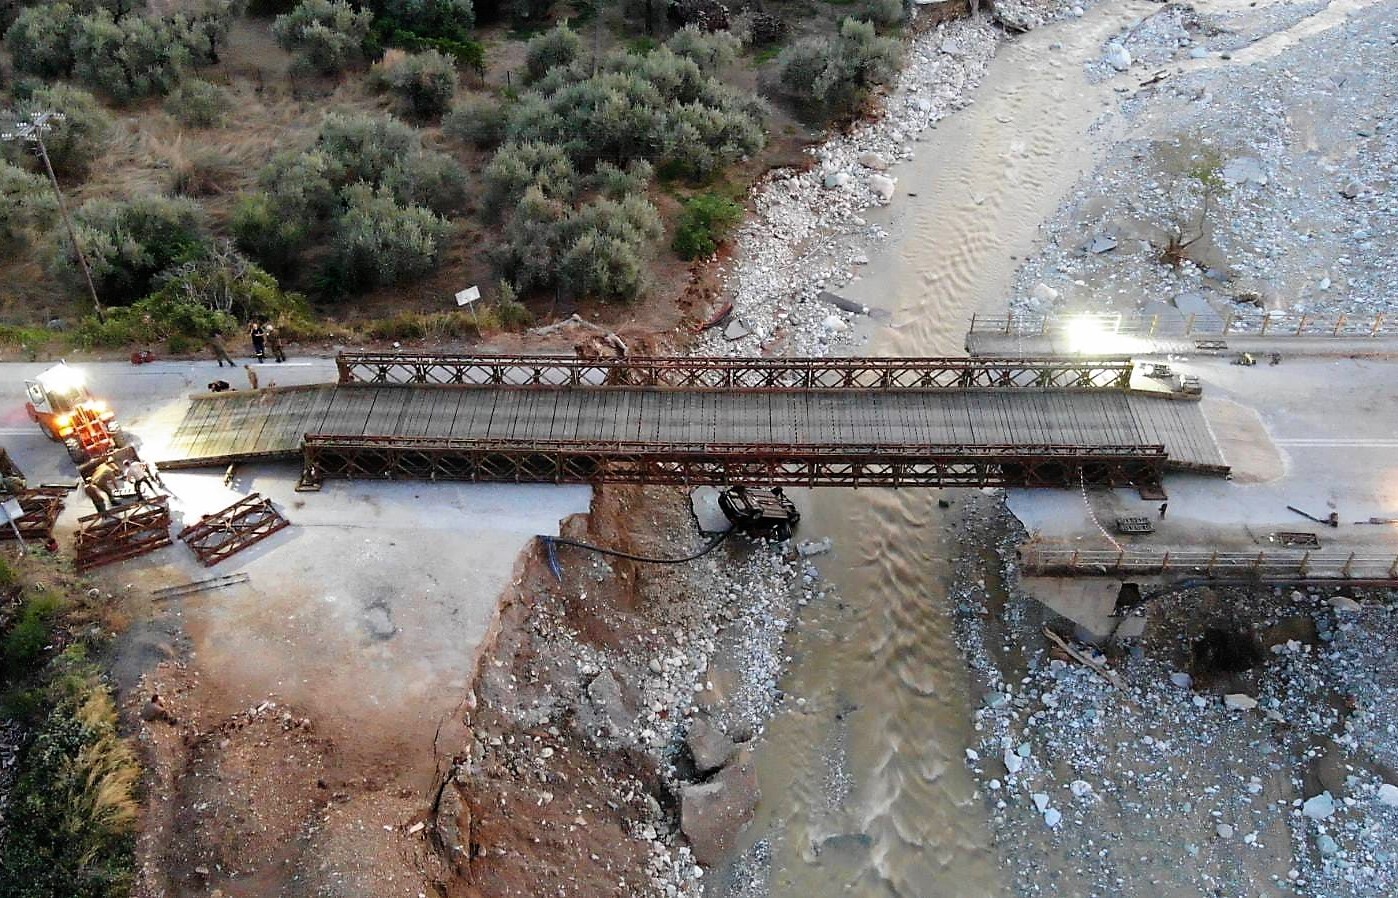 More information about "Κατασκευή γέφυρας τύπου Μπέλεϋ 30 μέτρων στα Καλά Νερά Μαγνησίας από την ΜΟΜΚΑ"